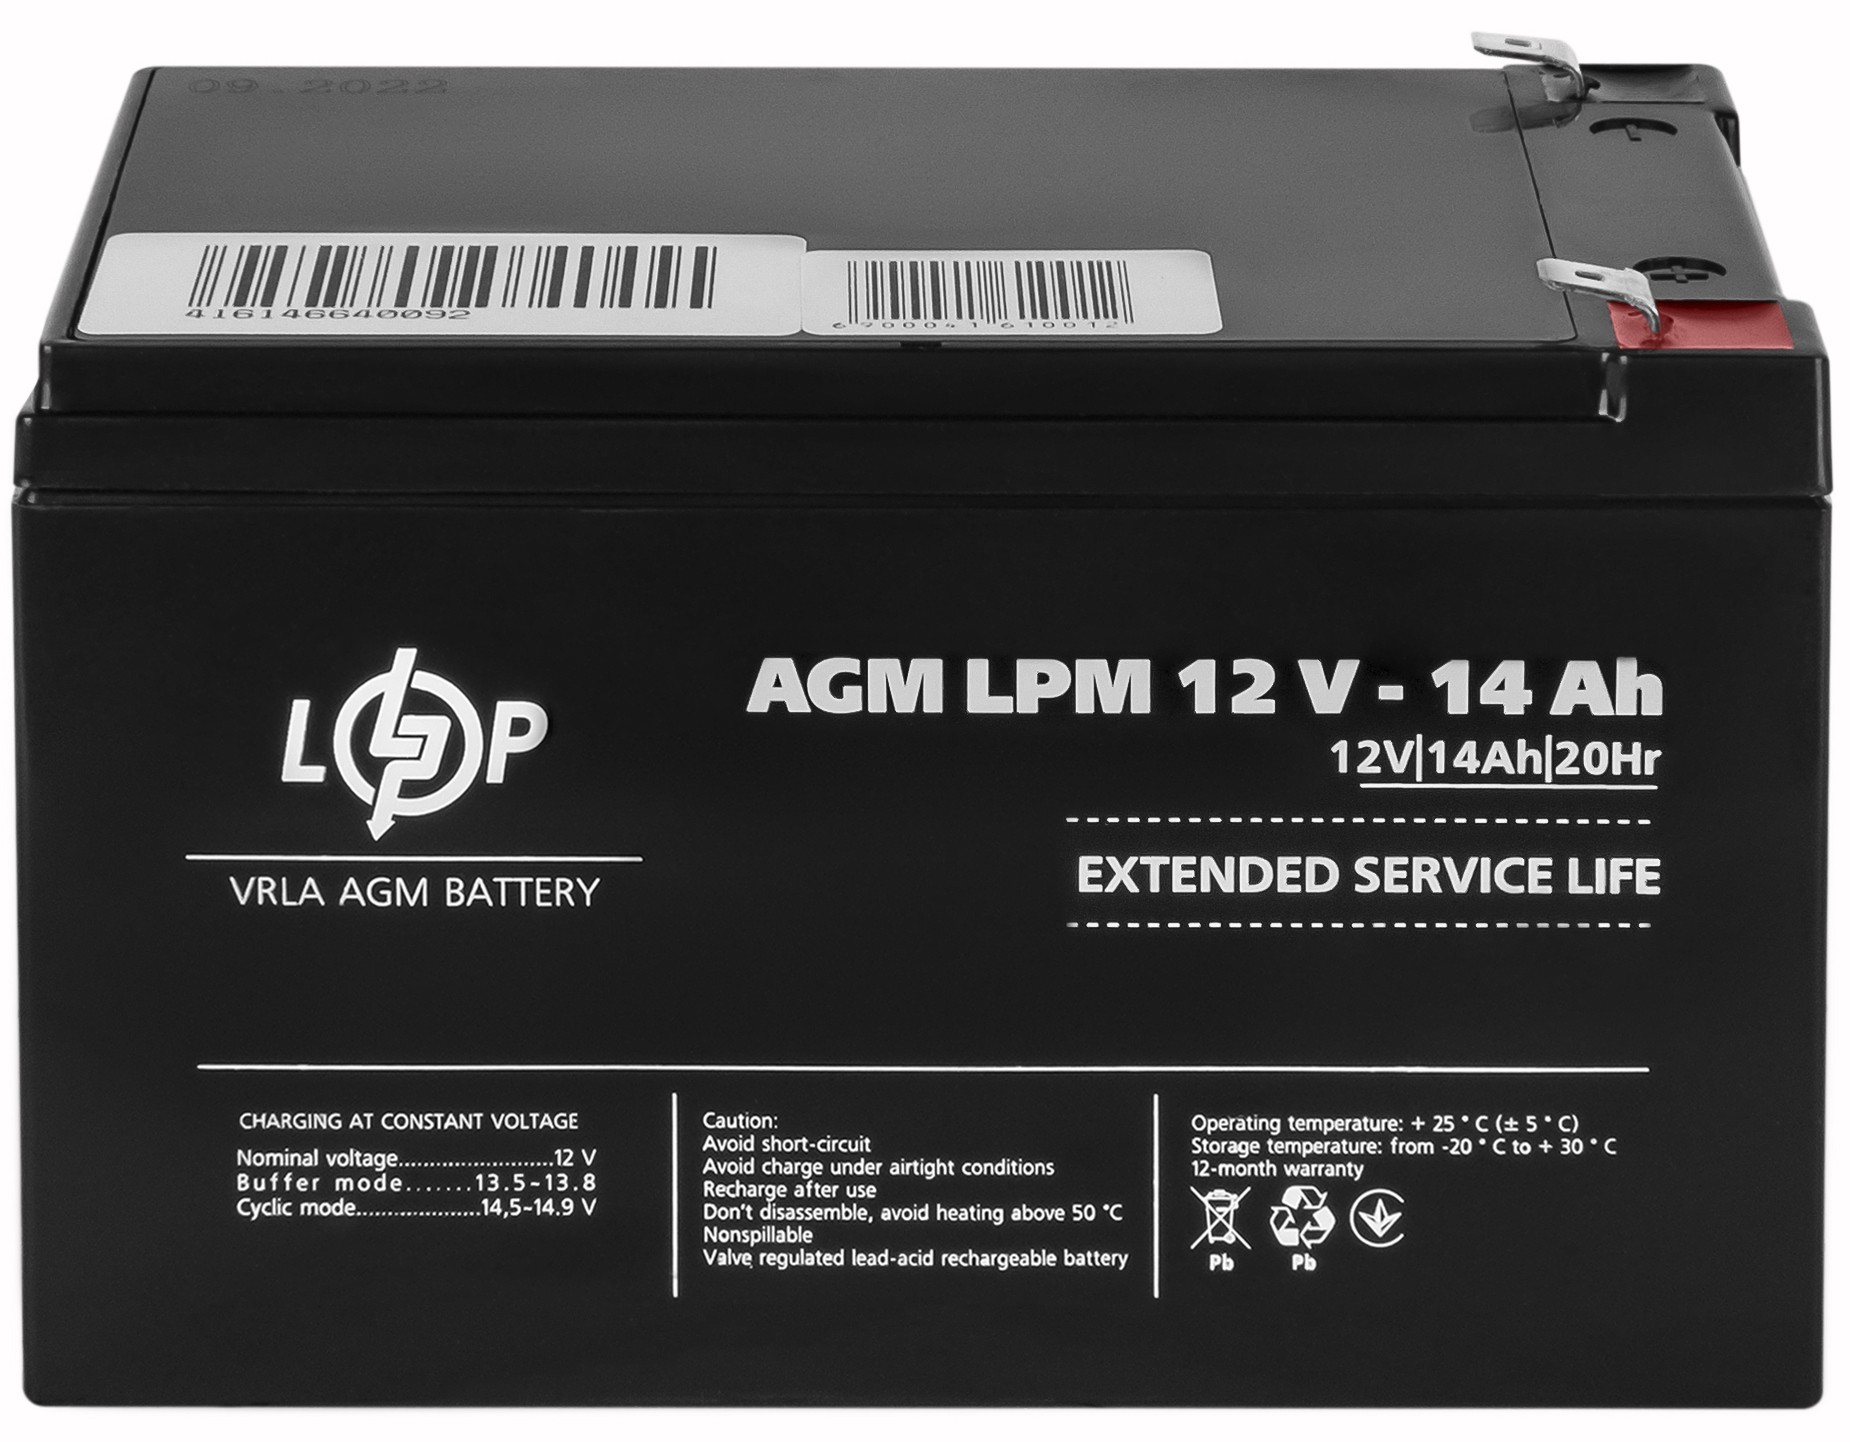 Характеристики аккумулятор LogicPower AGM LPM 12V - 14 Ah (4161)